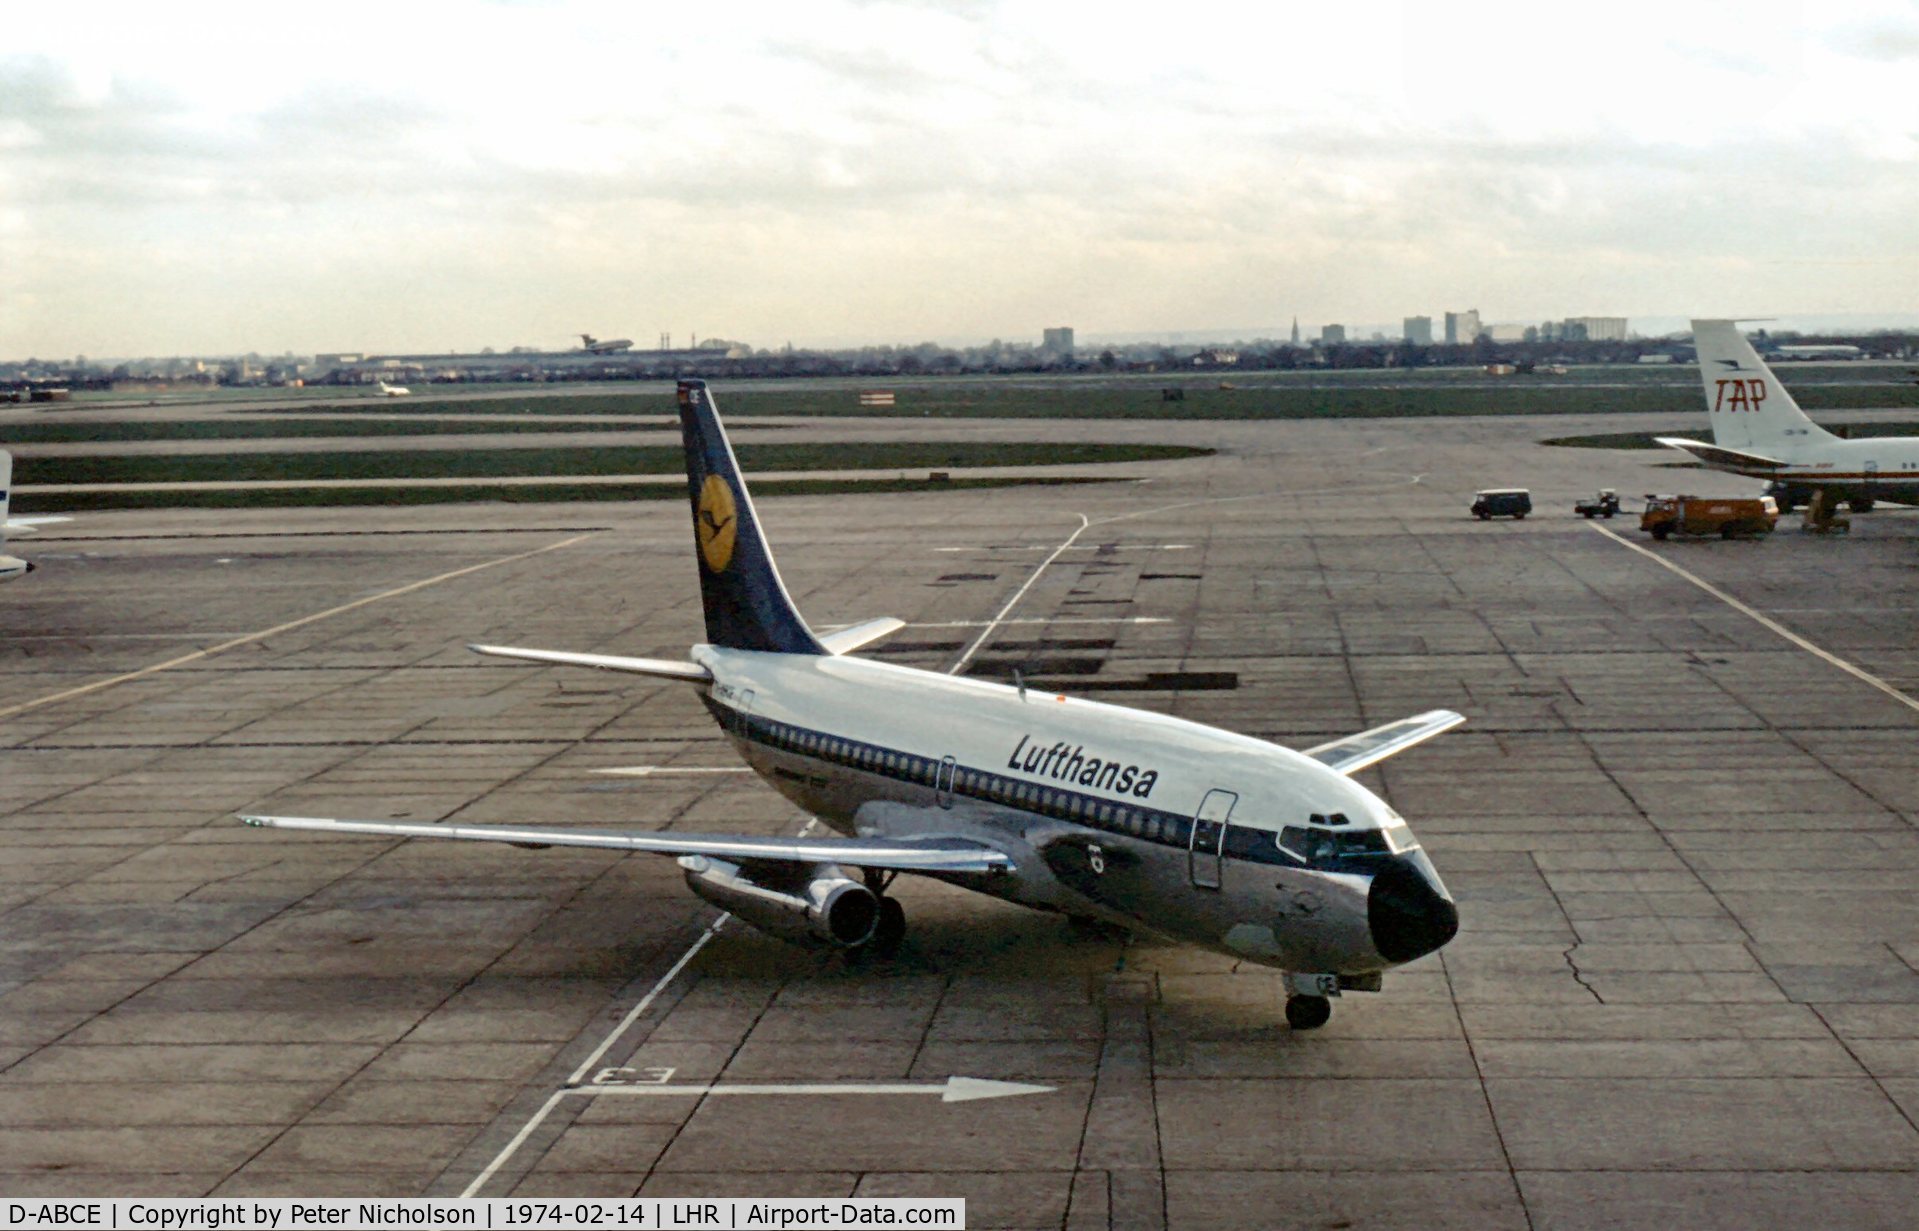 D-ABCE, 1970 Boeing 737-230C C/N 20254, Lufthansa Boeing 737-230C named Landshut arriving at Heathrow in February 1974.